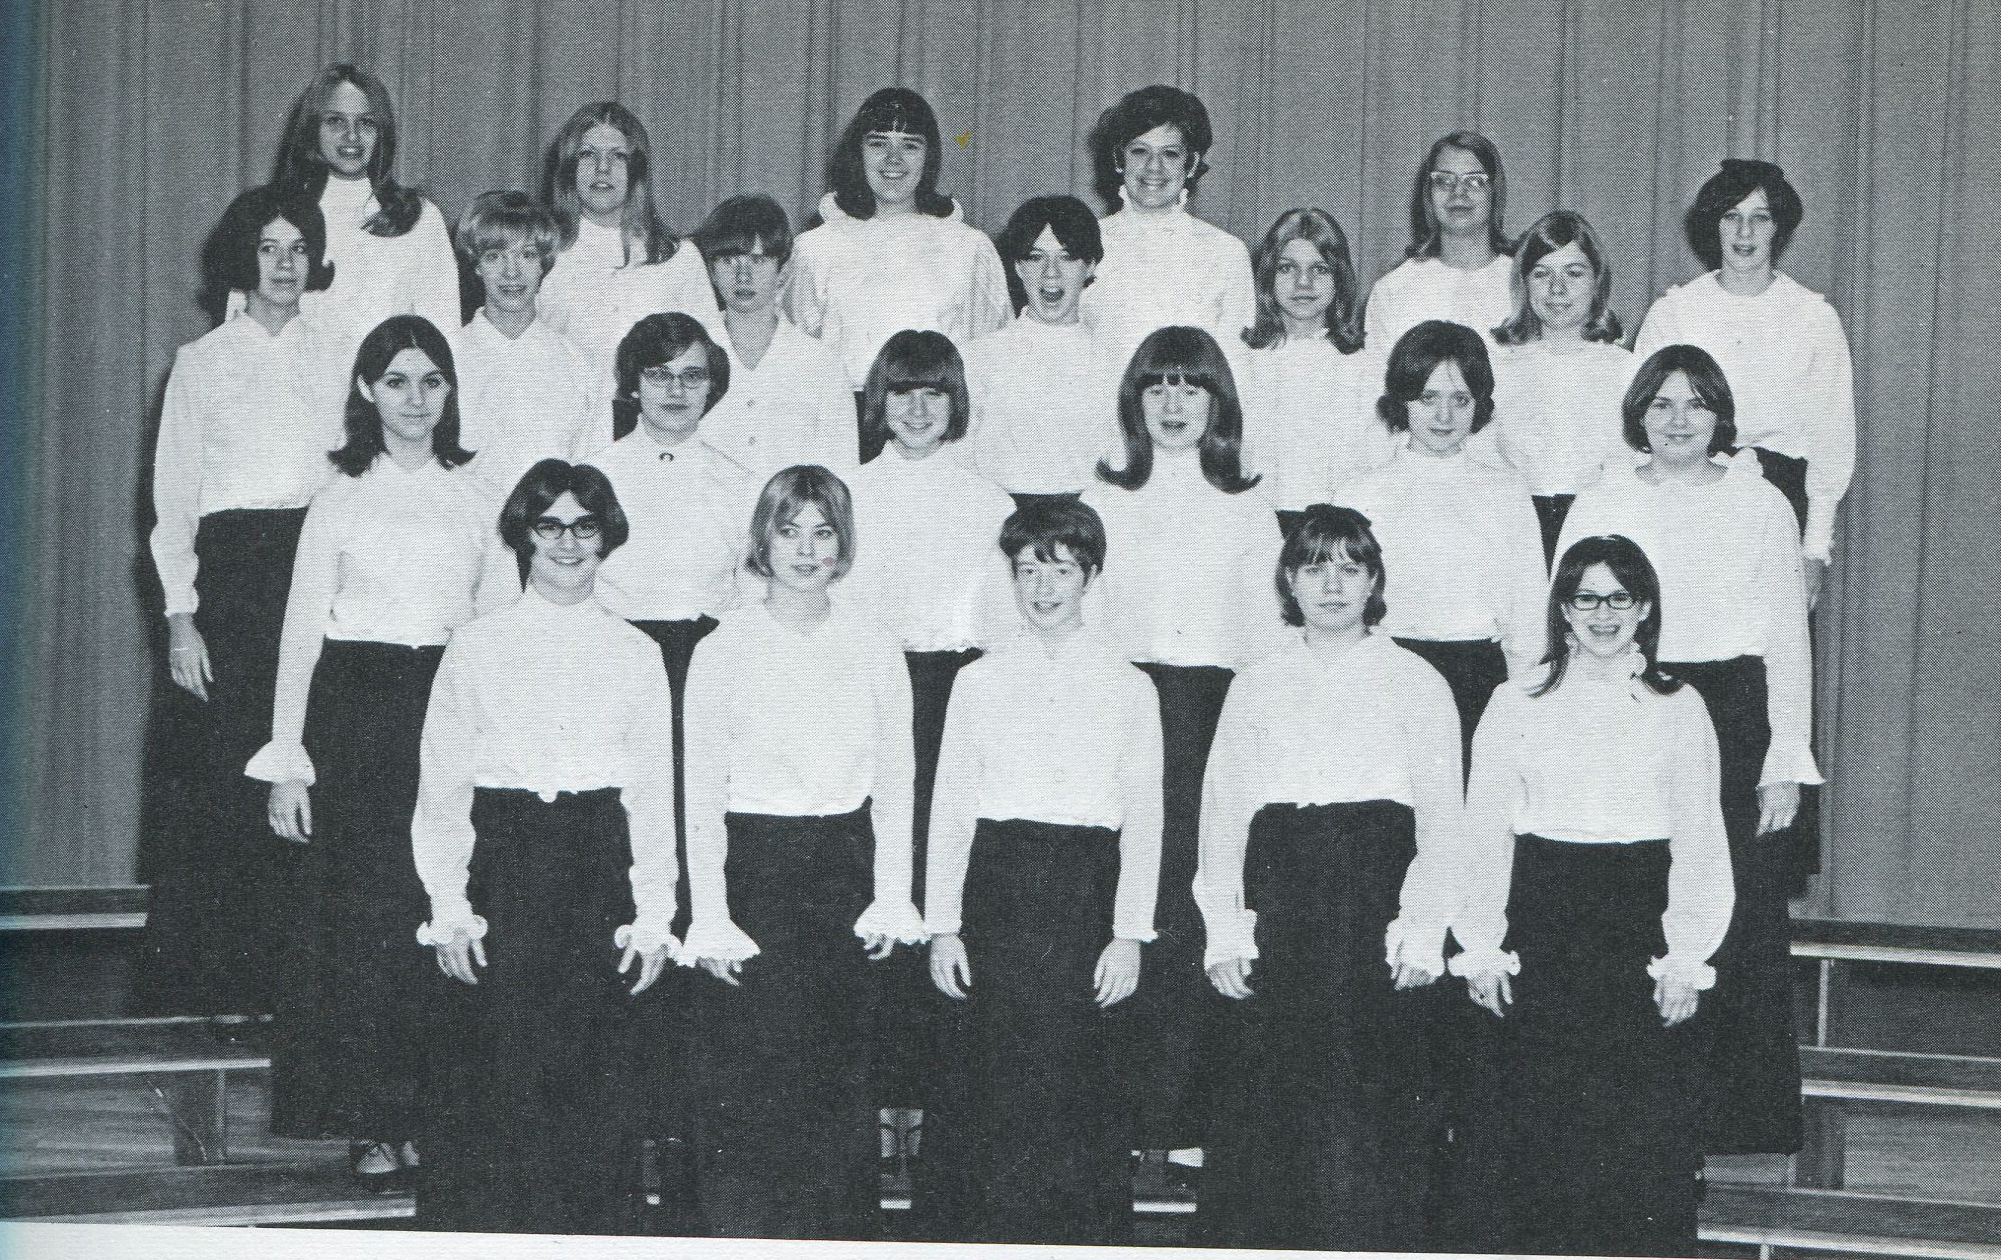 1968 Glee Club